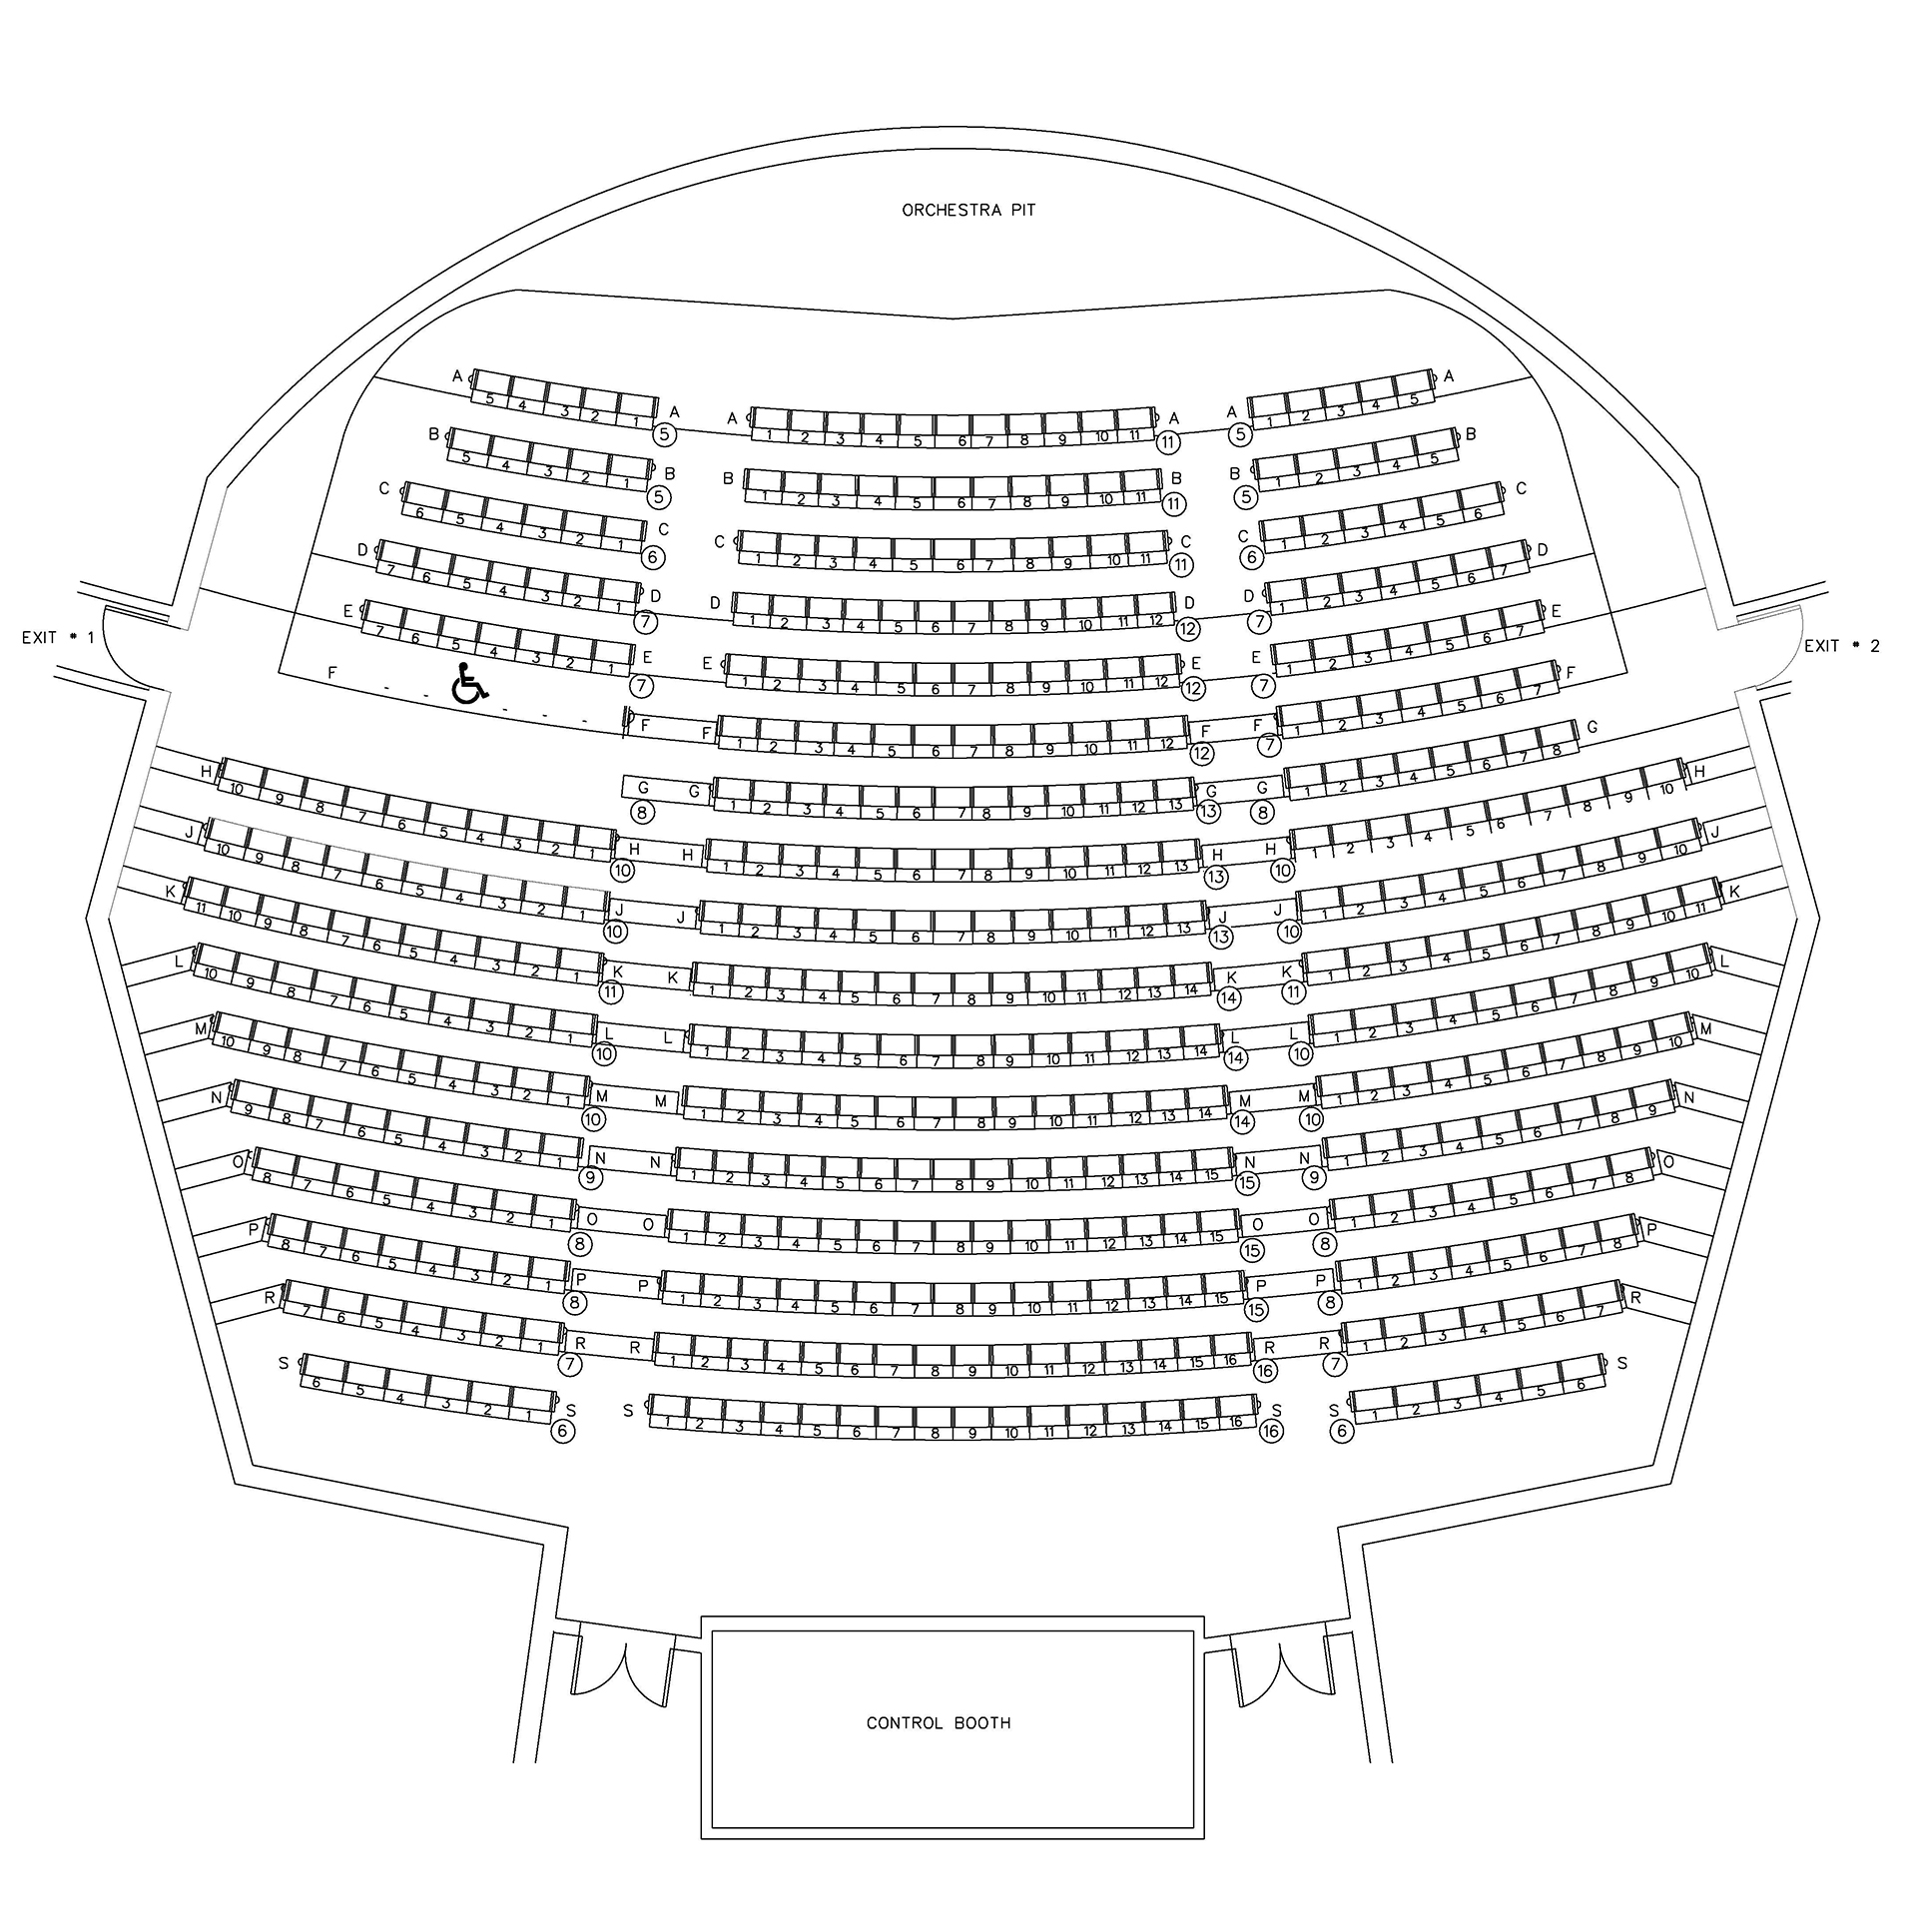 Spitz Stadium Lethbridge Seating Chart